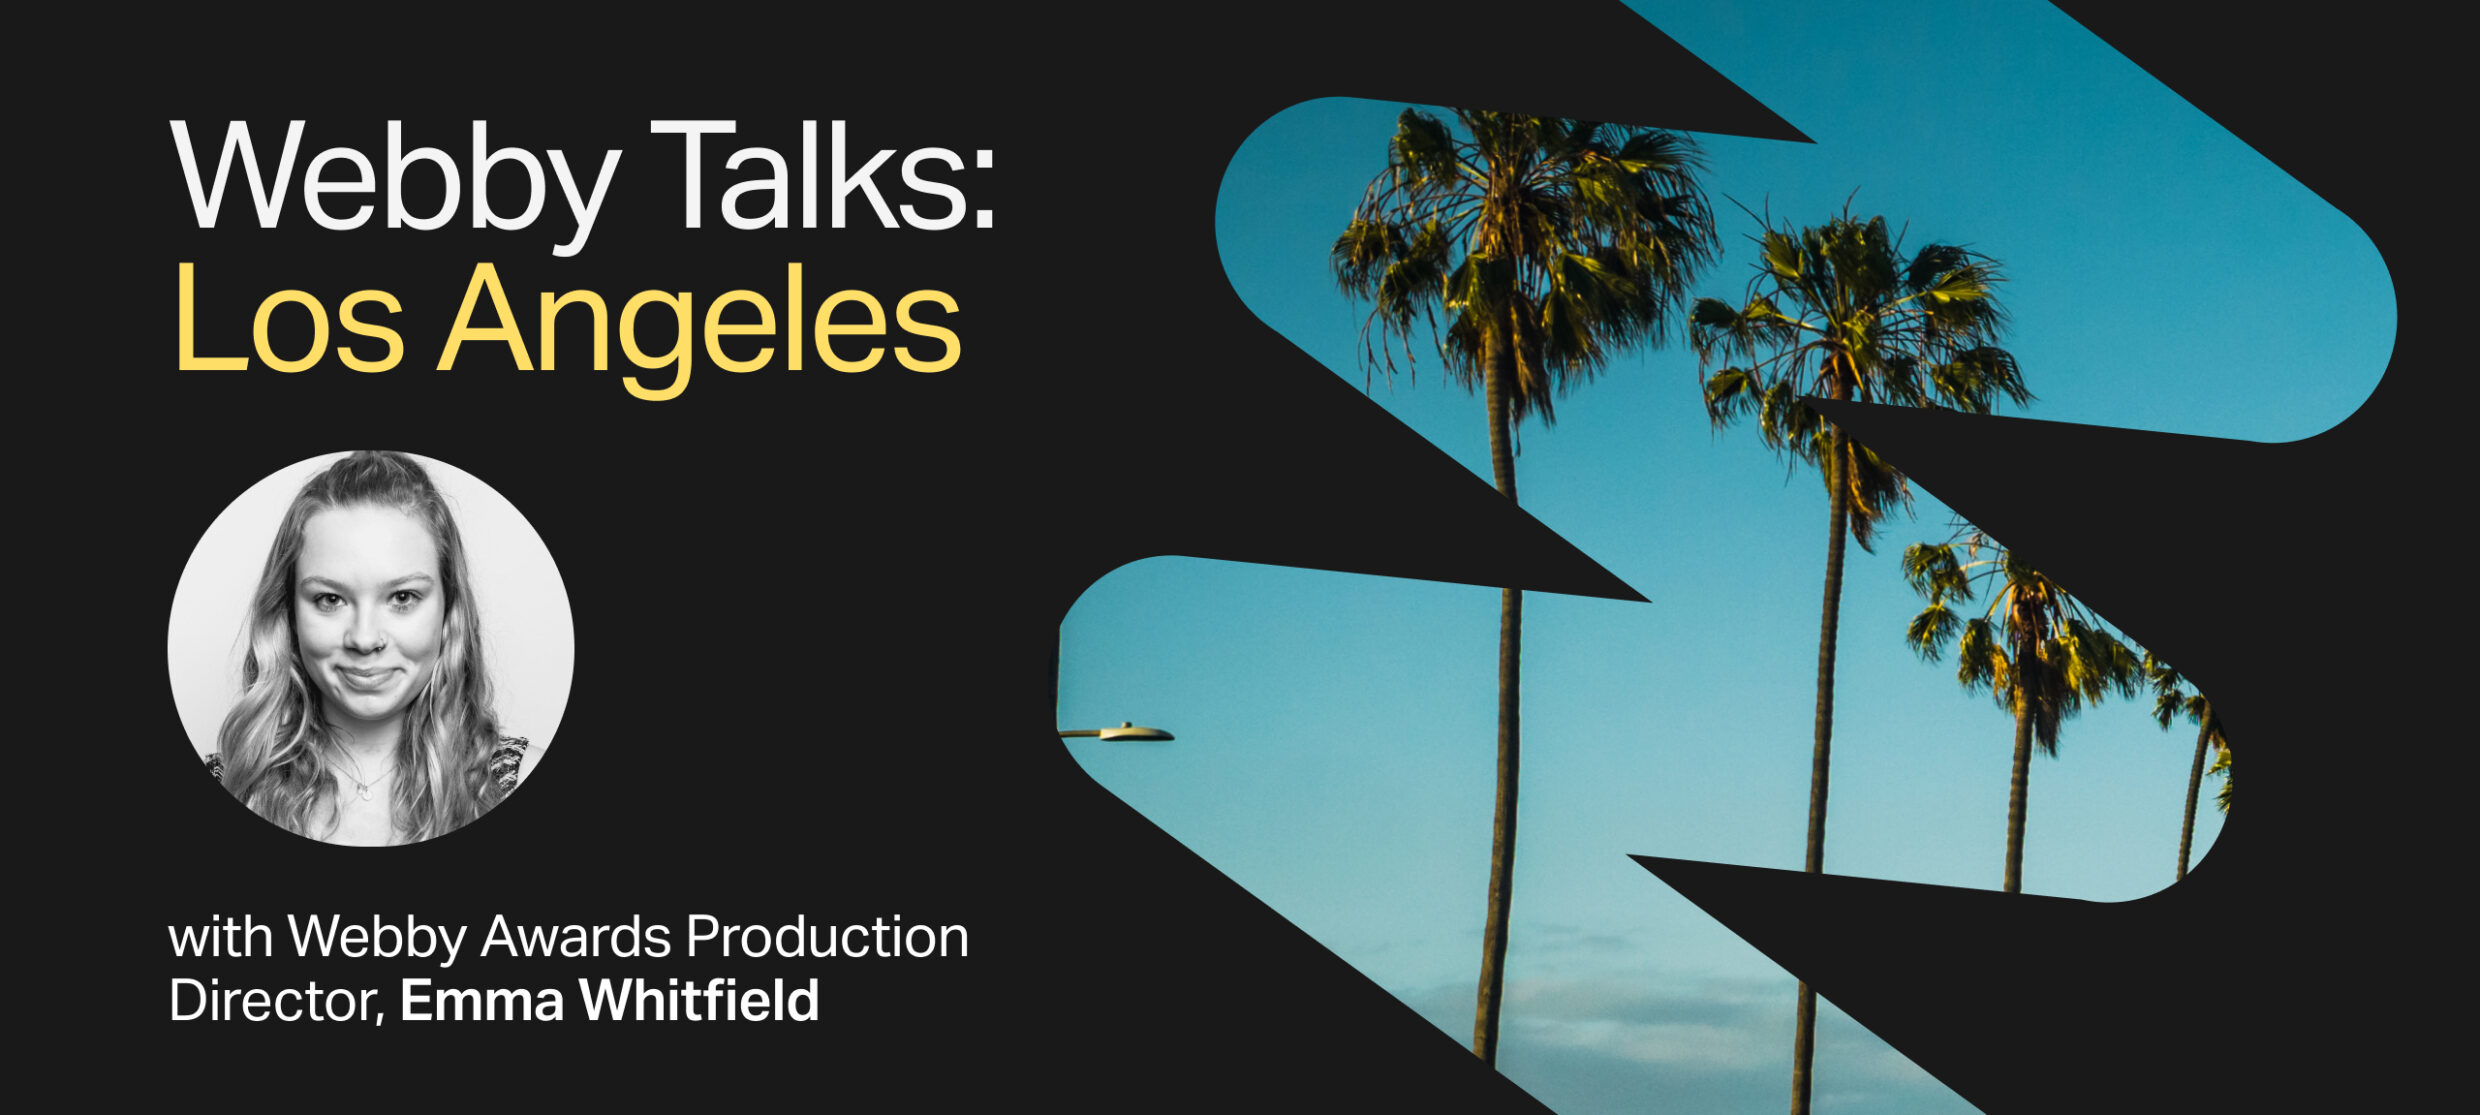 Los Angeles: Webby Talk Community Event 